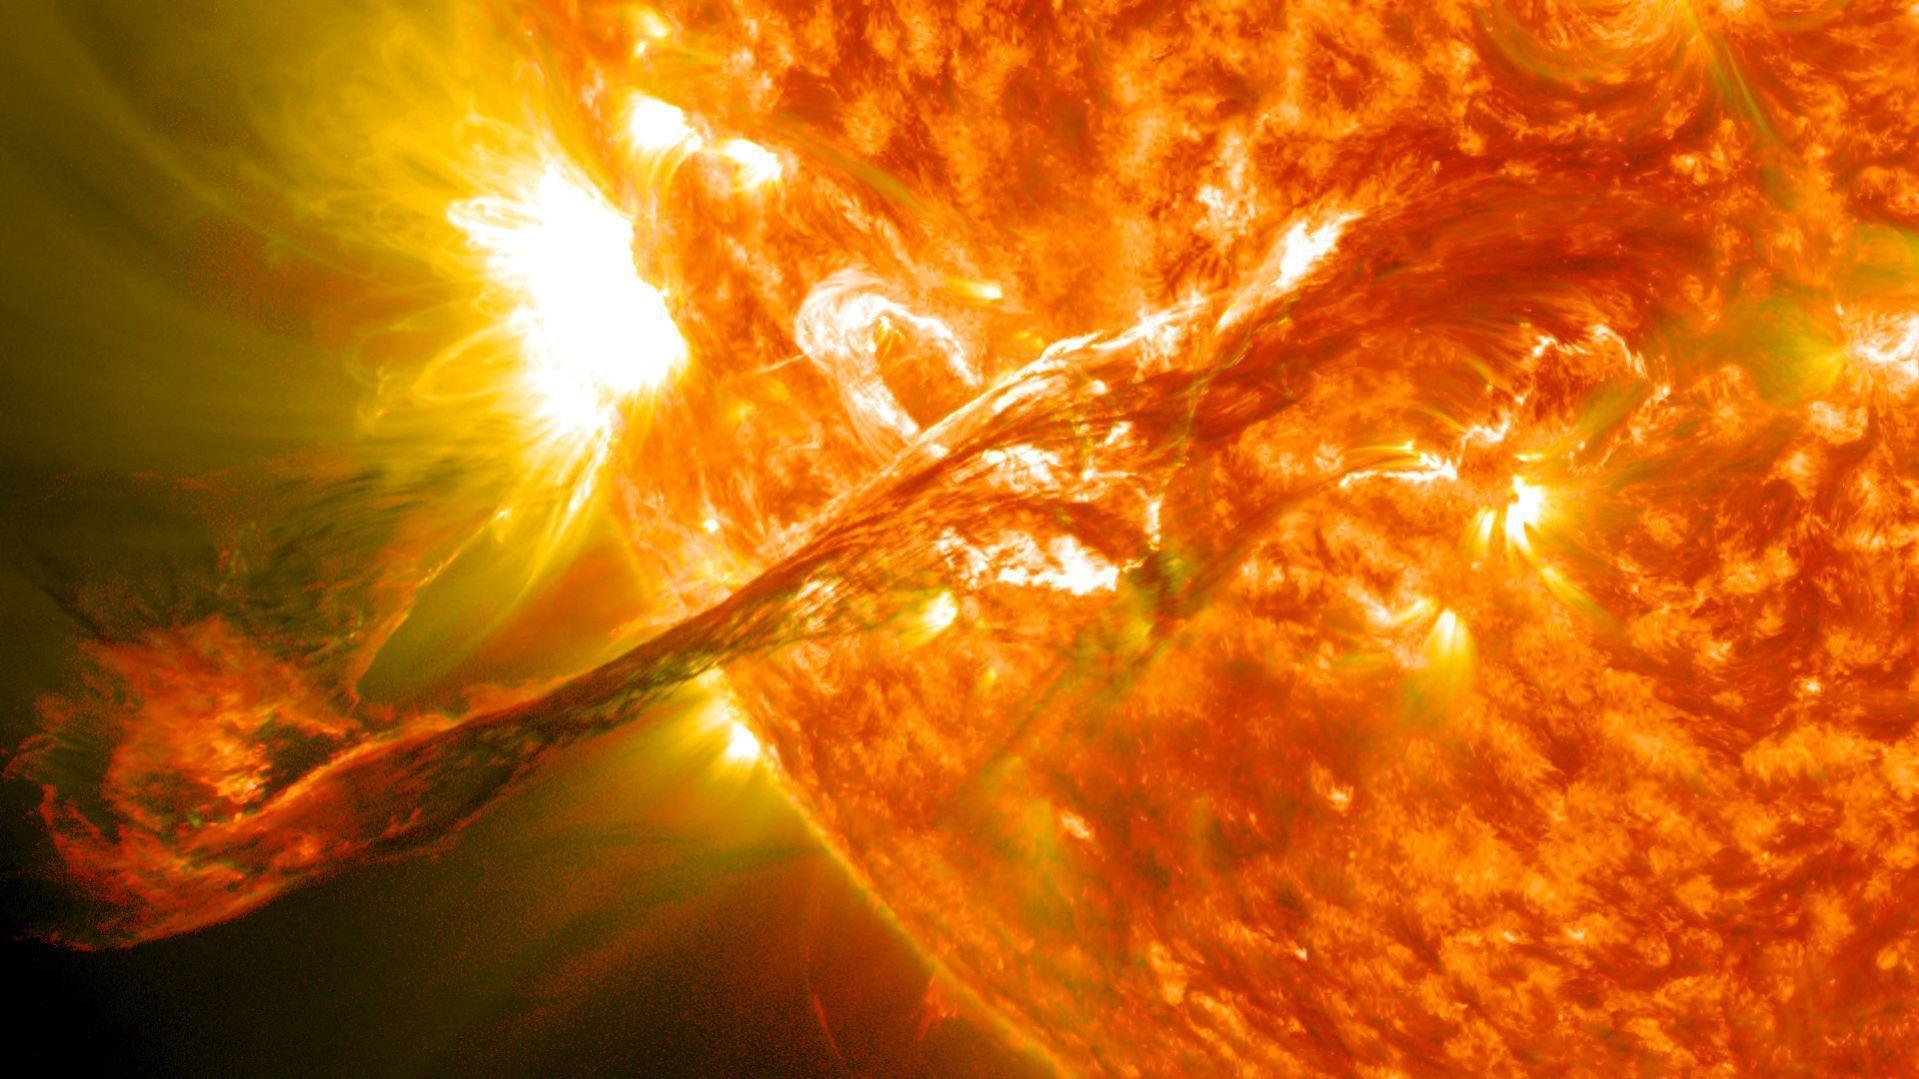 Fantastic shot of a solar flare